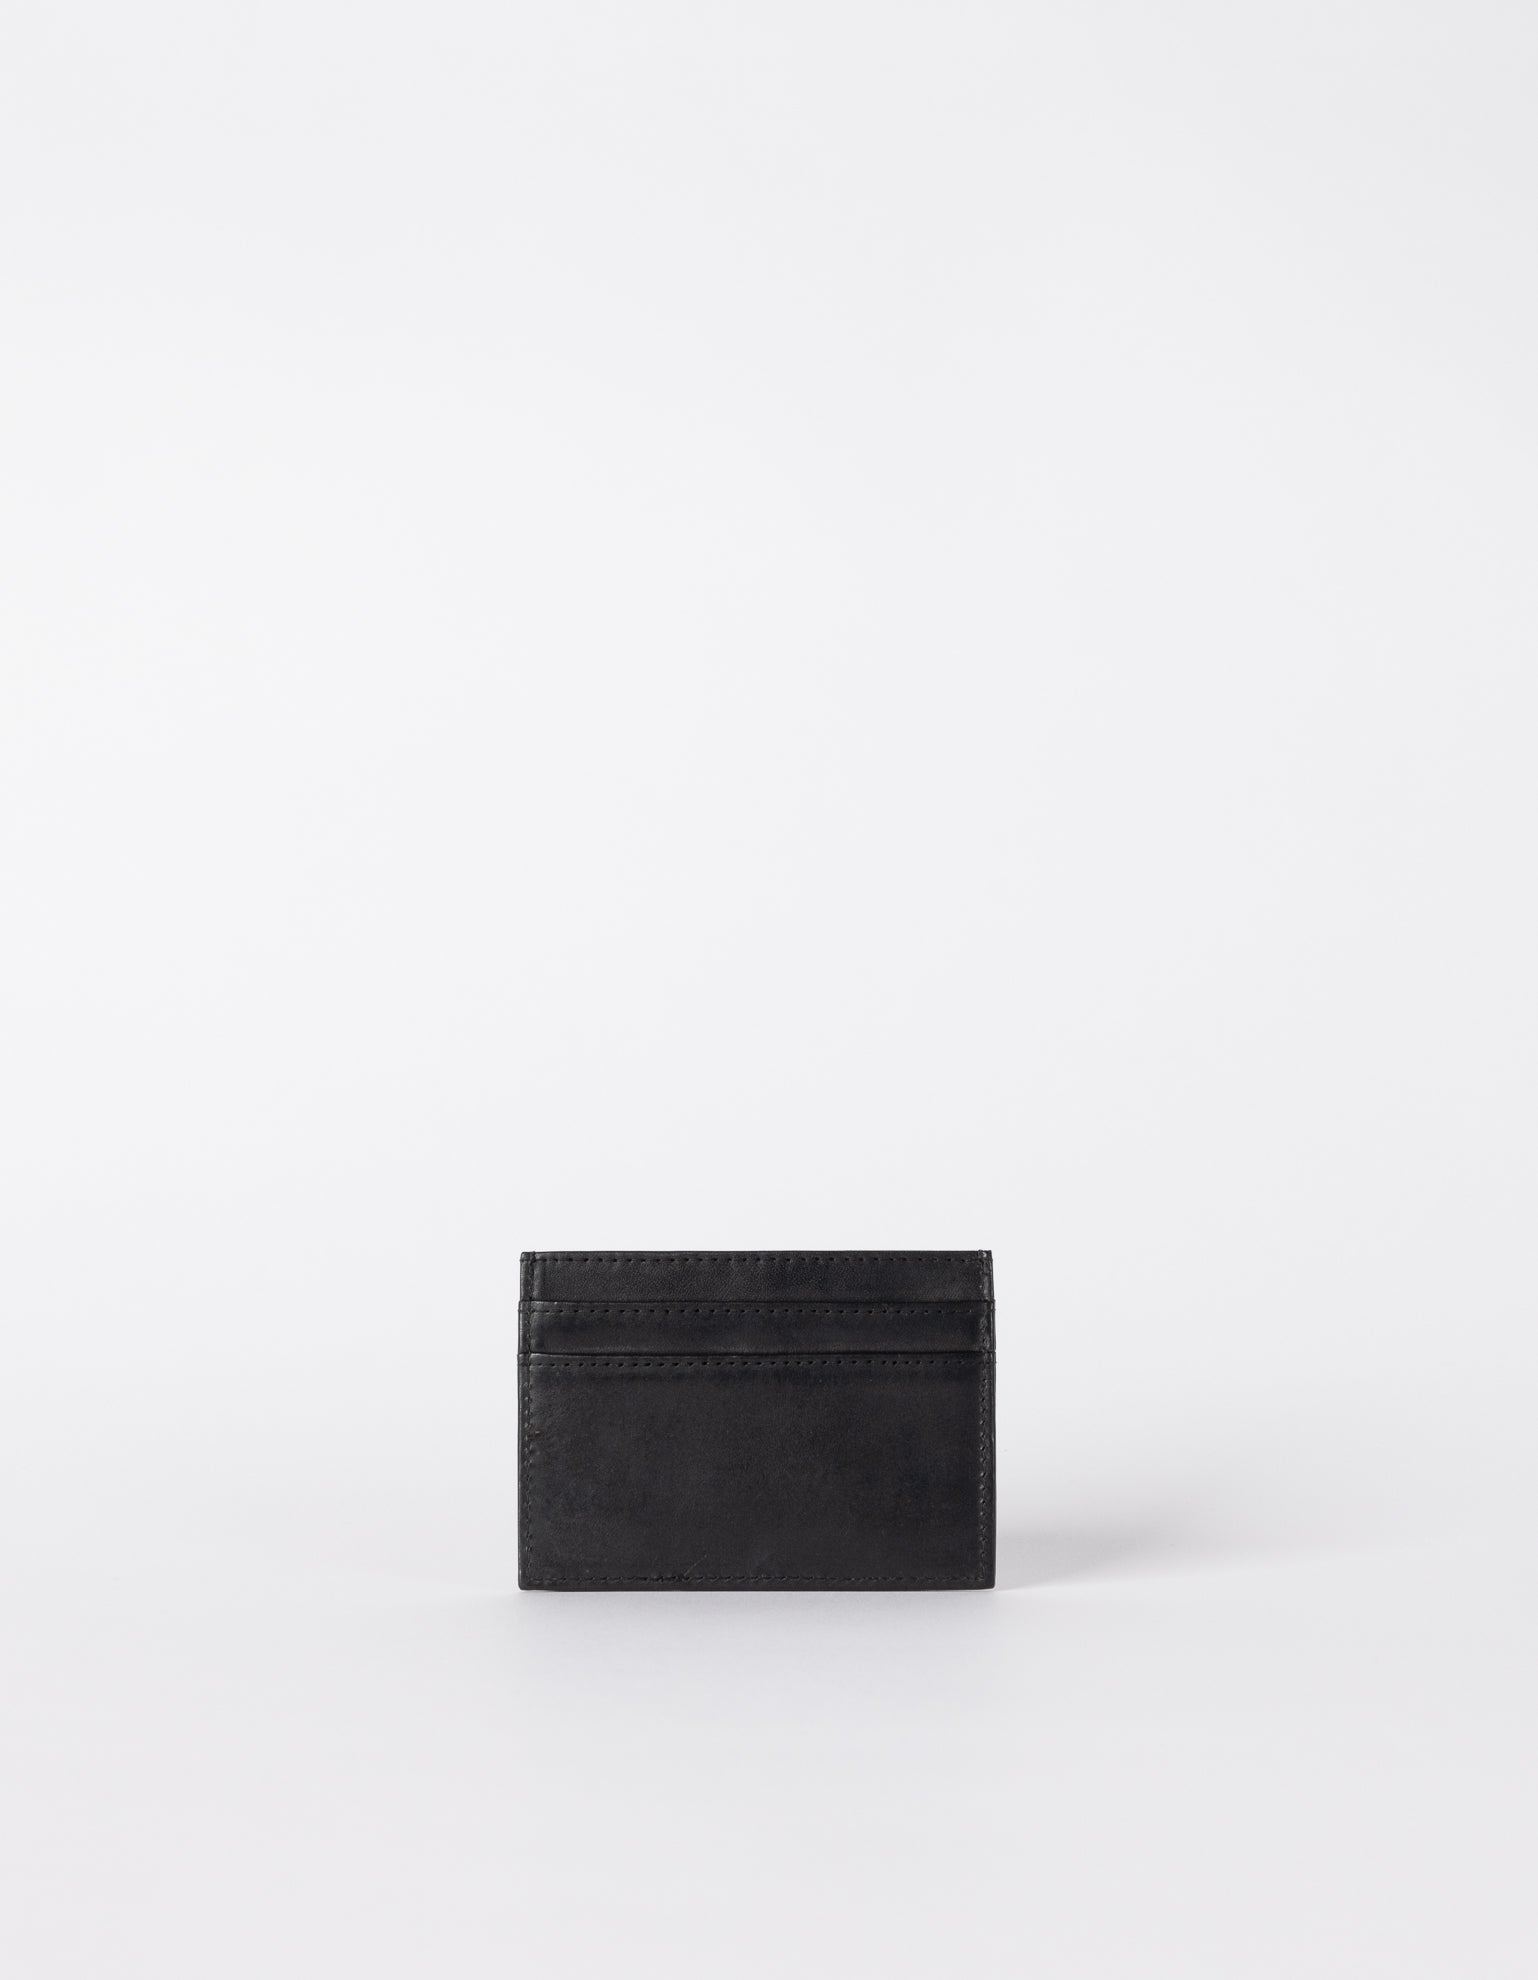 Mark's Cardcase - Black Classic Leather